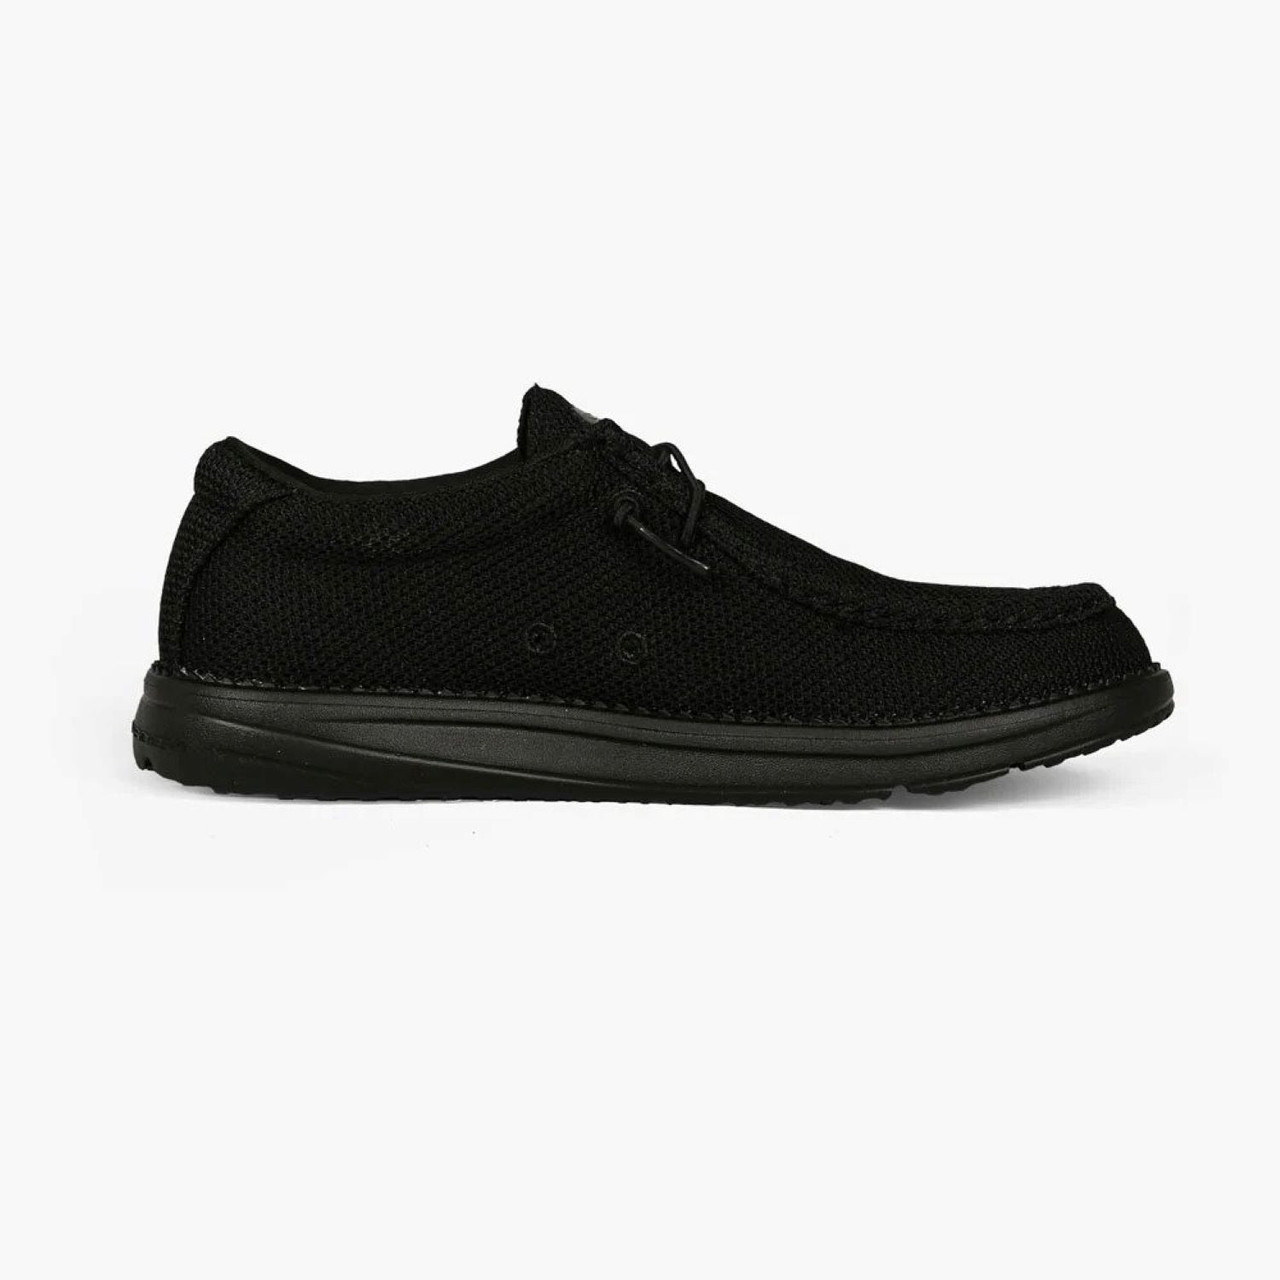 Gator Waders Men Camp Shoes Light & Comfortable - Black - Regular Size 12